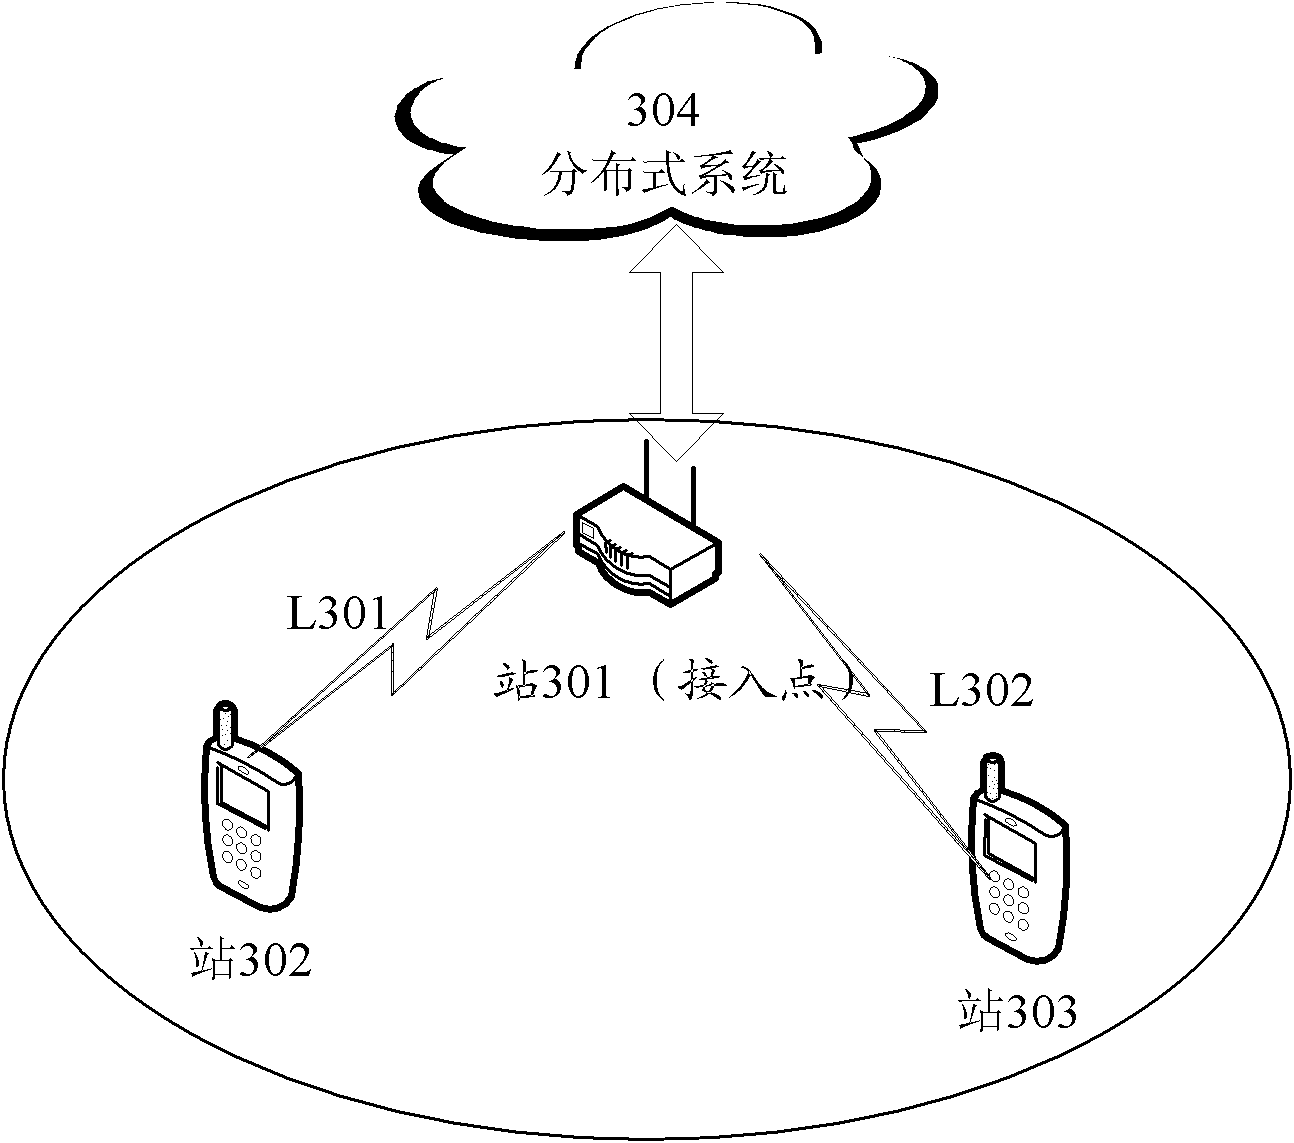 Processing method and terminal device for avoiding WLAN beacon